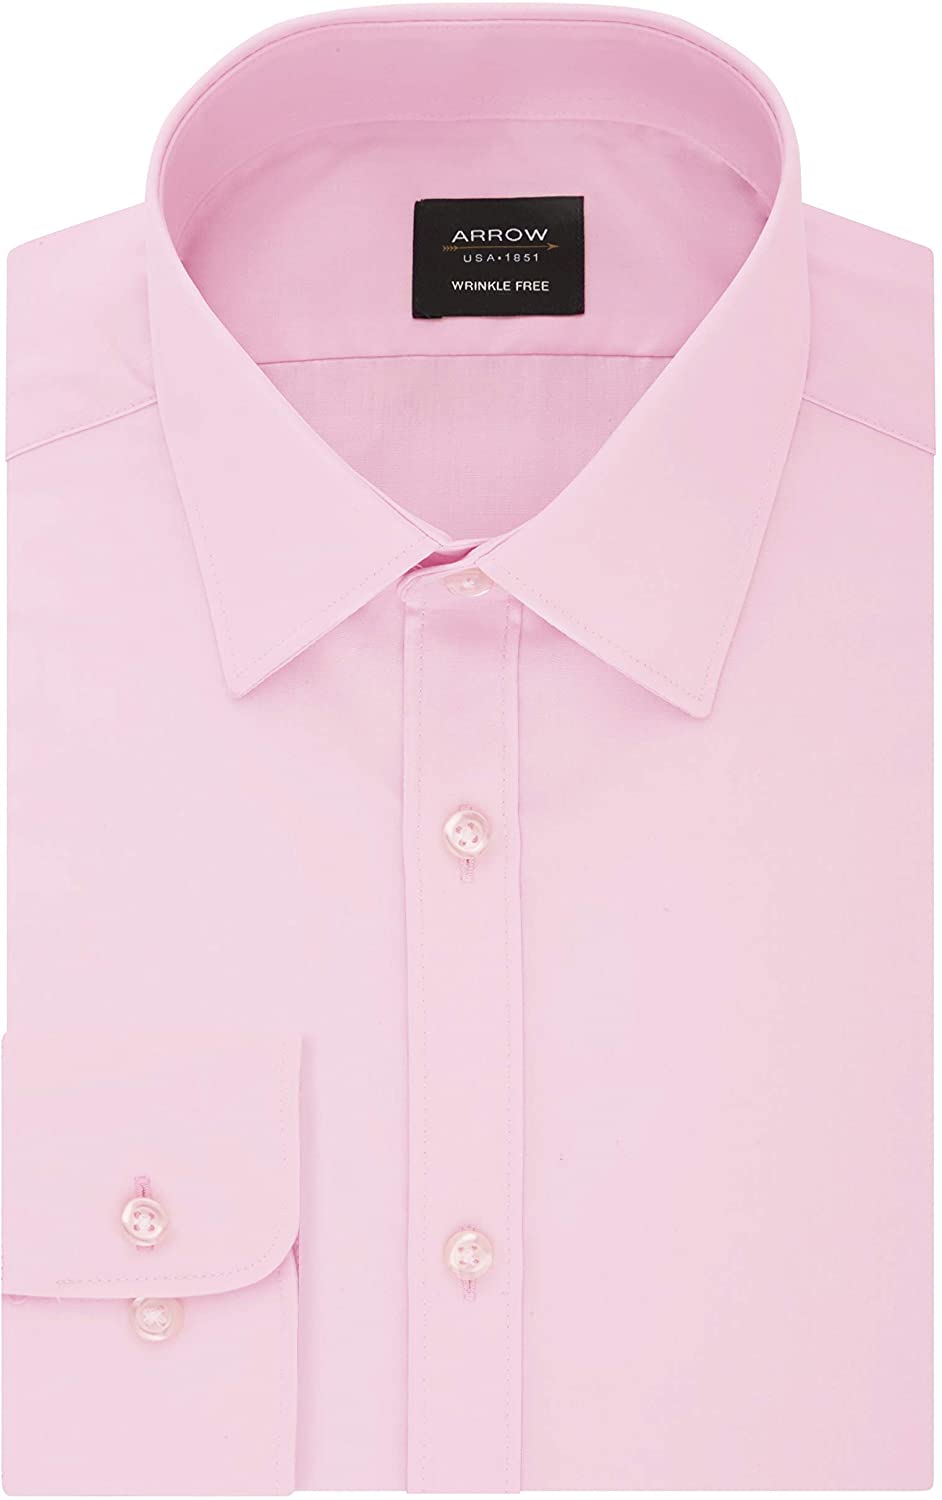 Arrow 1851 Men’s Dress Shirt Poplin (Available in Regular, Fitted, Slim ...